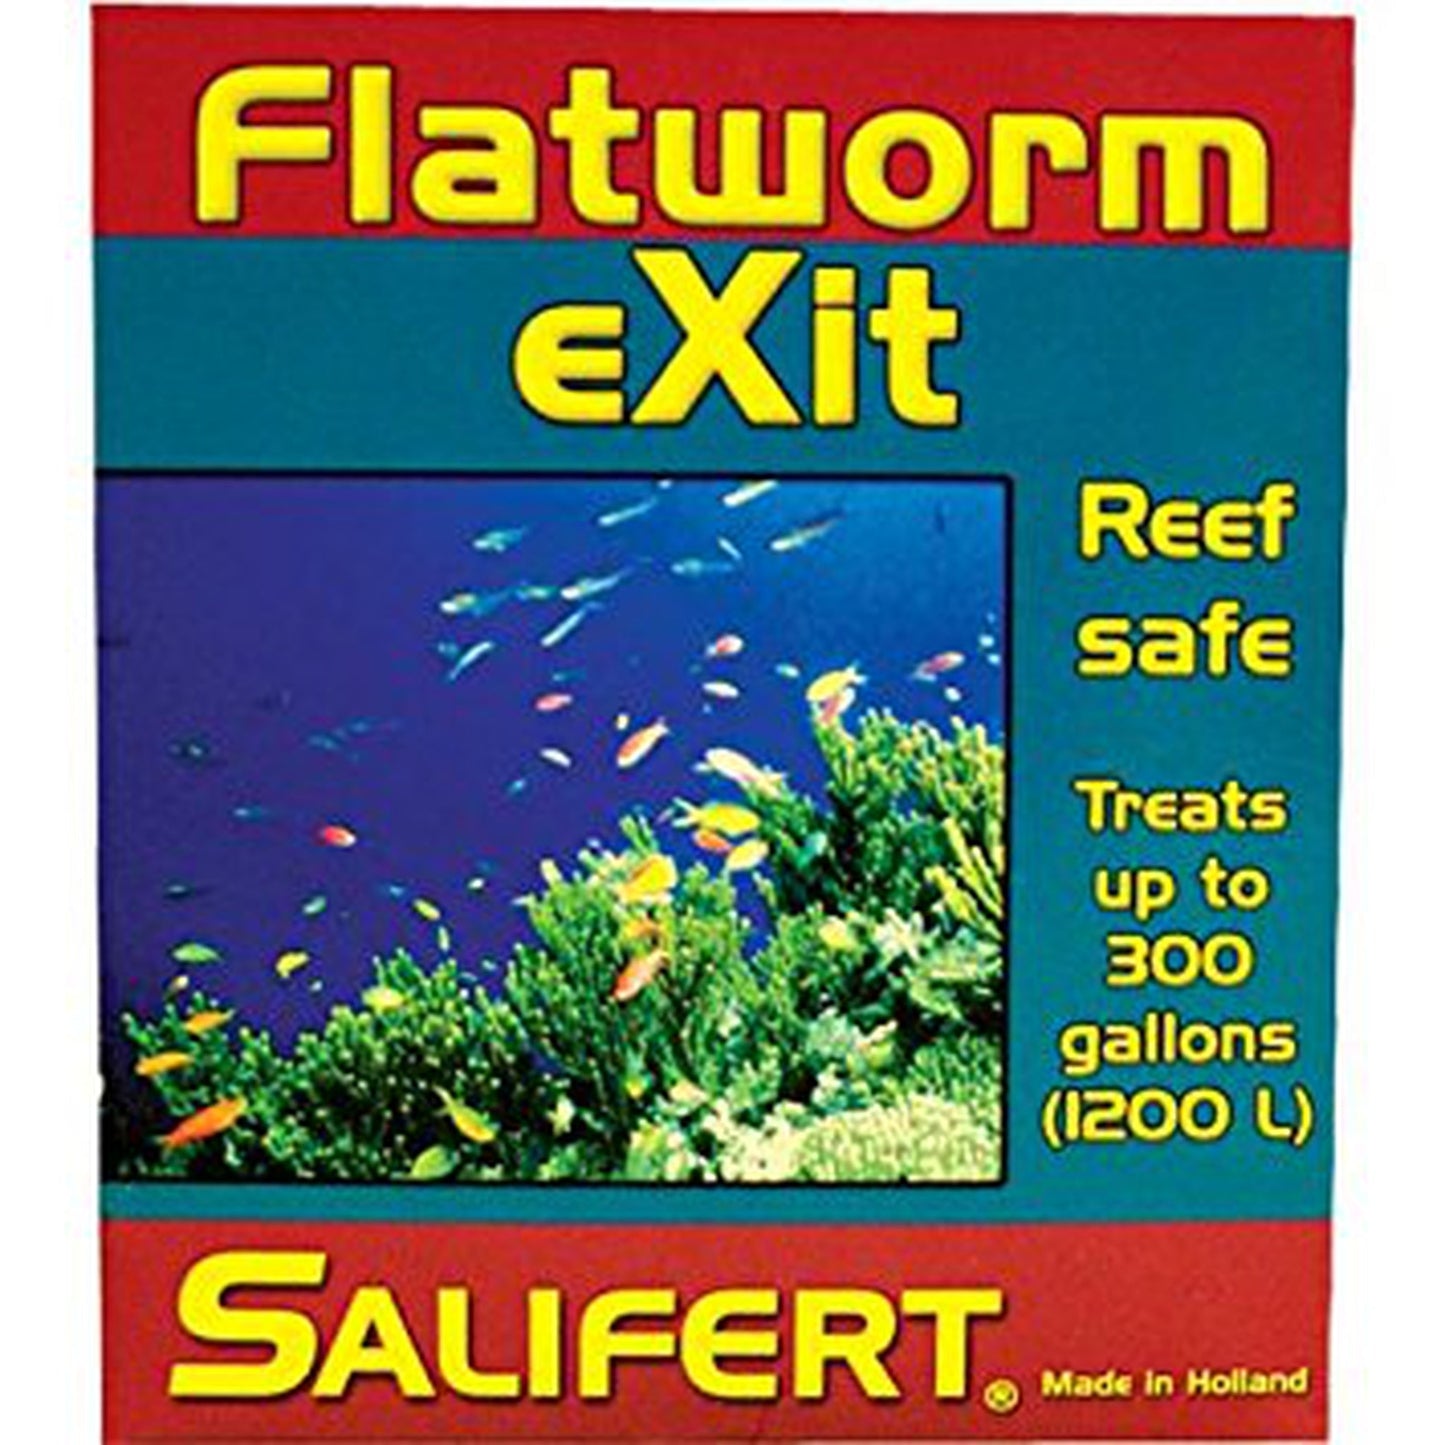 Salifert Flatworm Exit